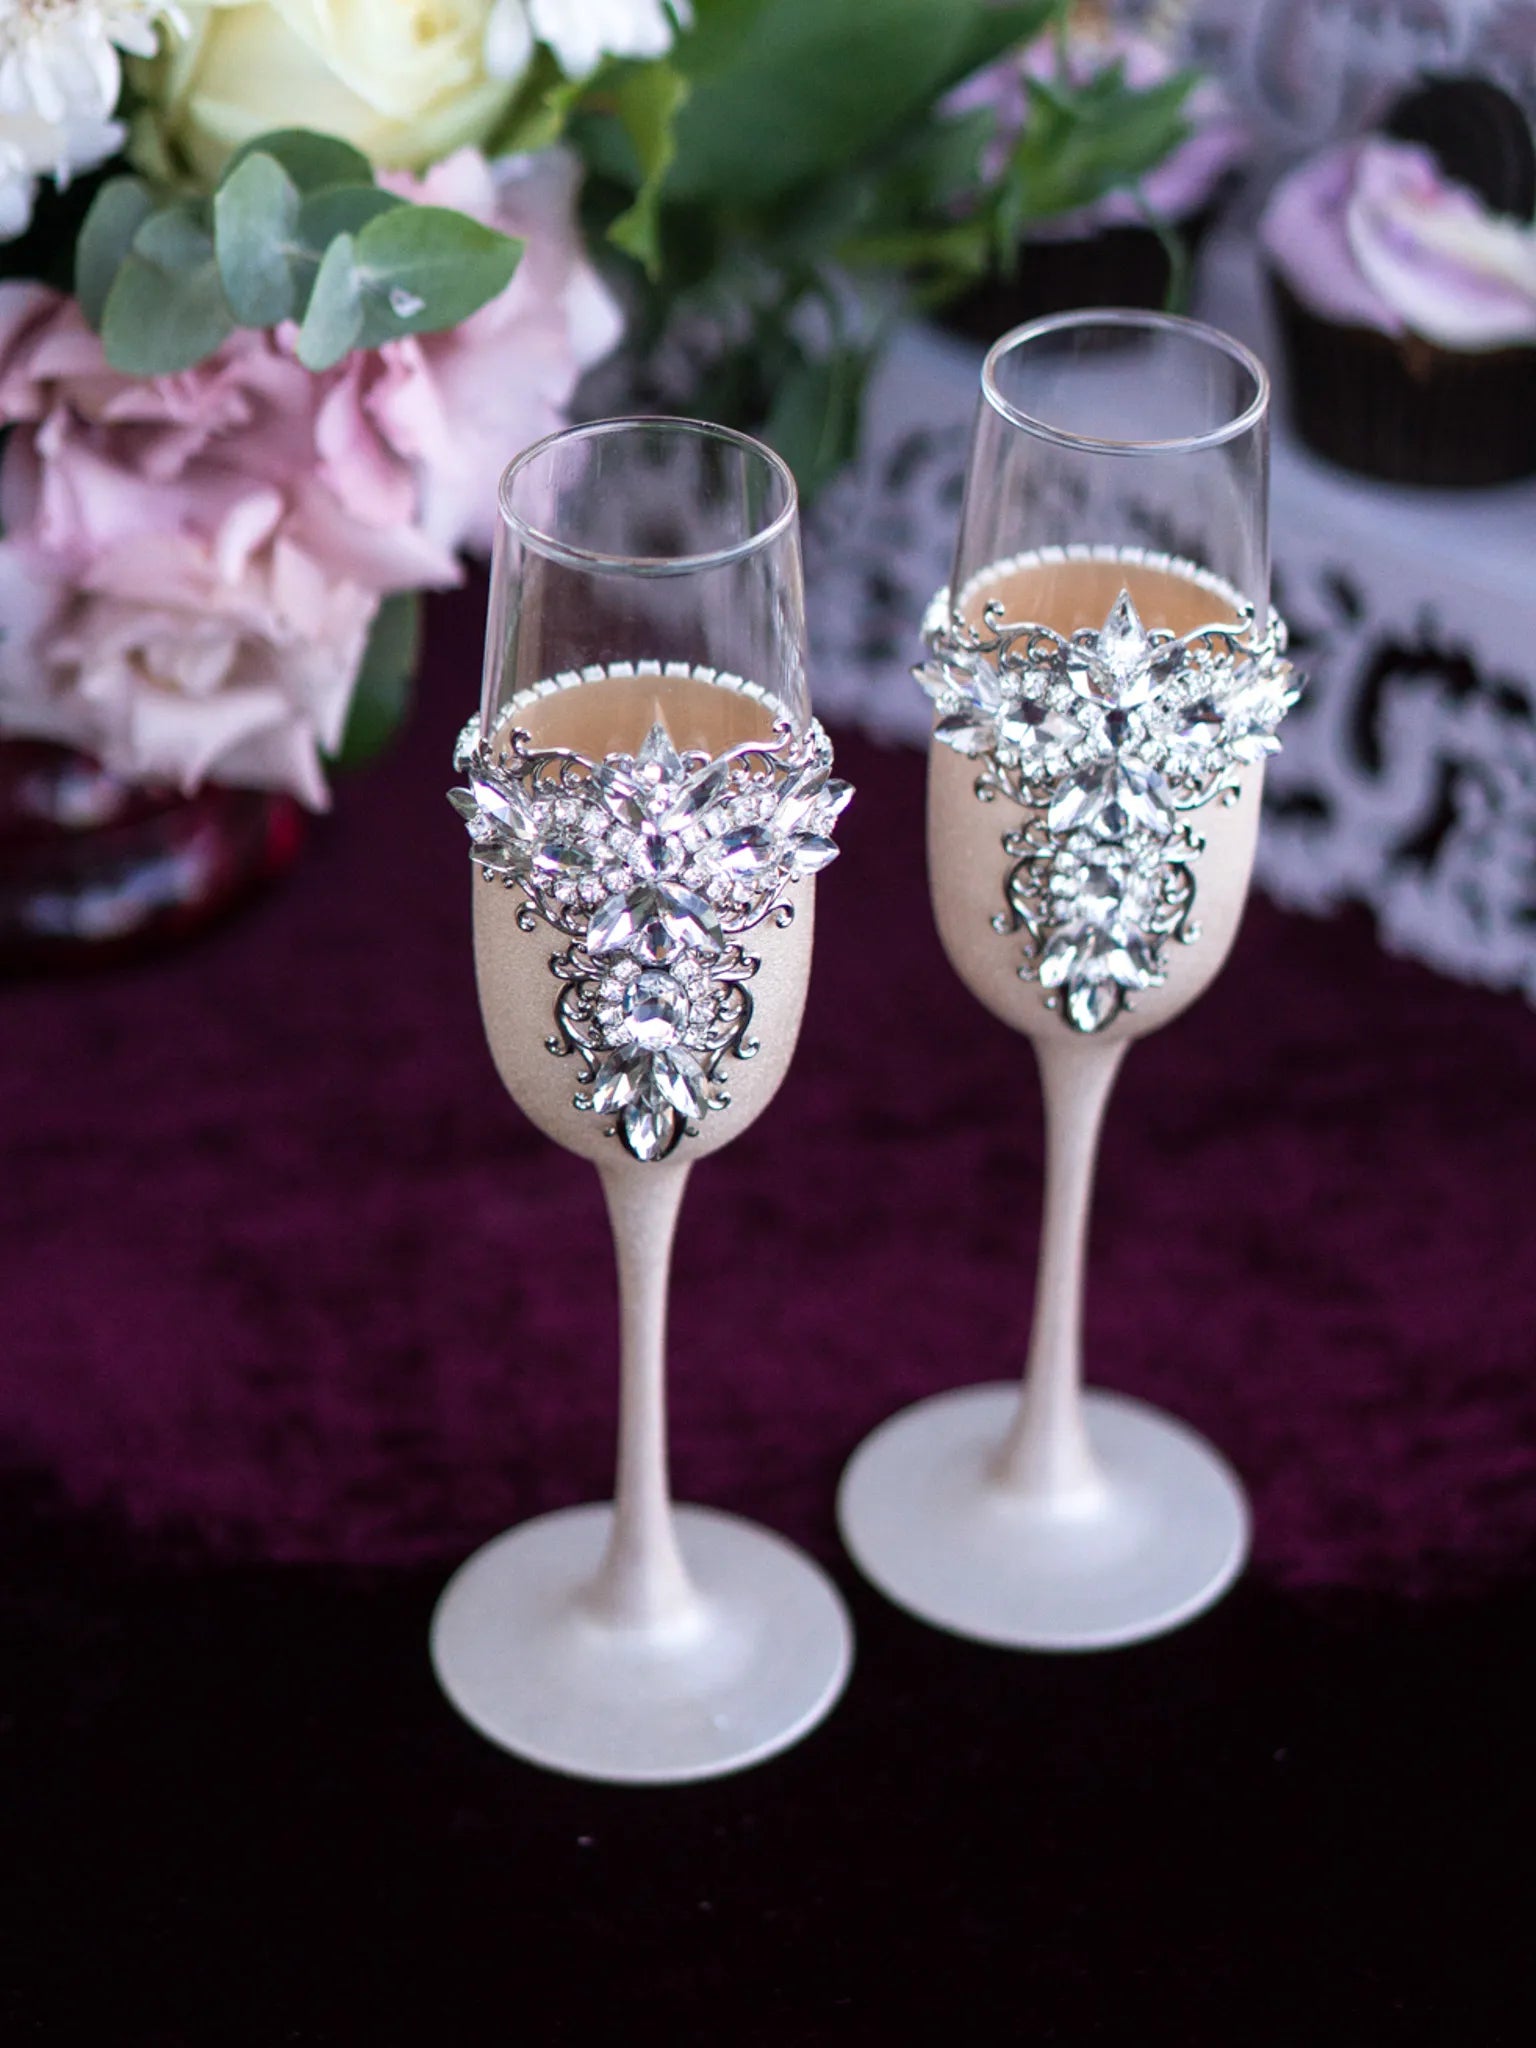 Rose Gold Metallic Champagne Flutes and Cake Serving Set